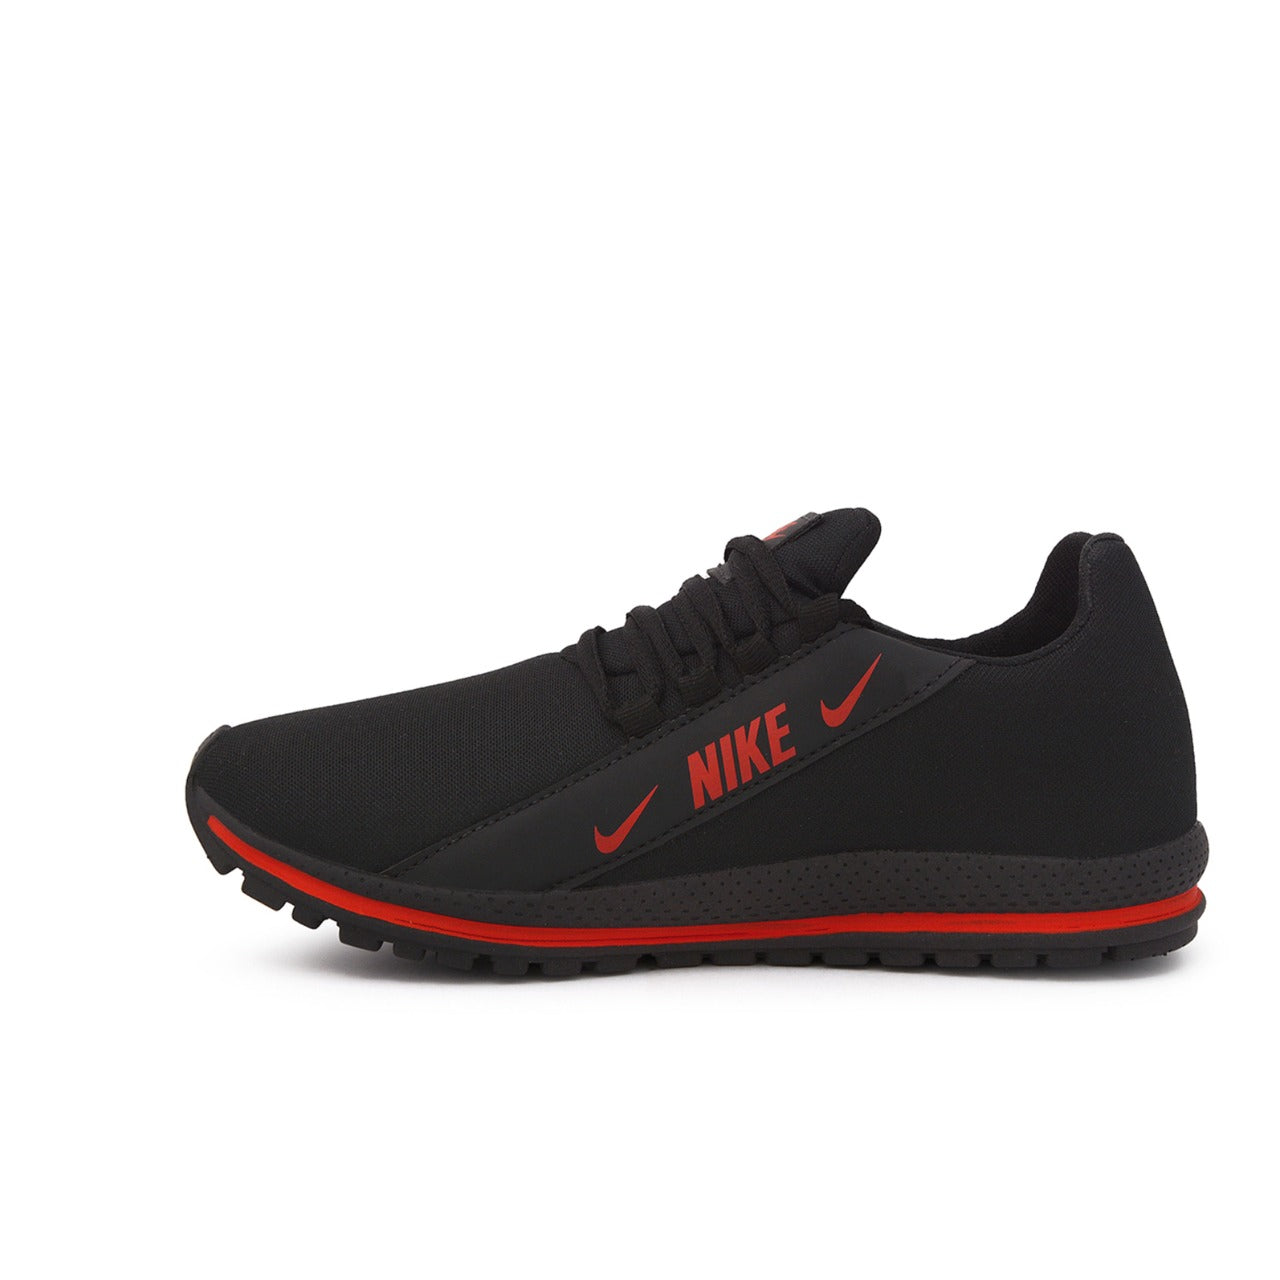 Tênis Nike Flex Evolution - Preto/Vermelho